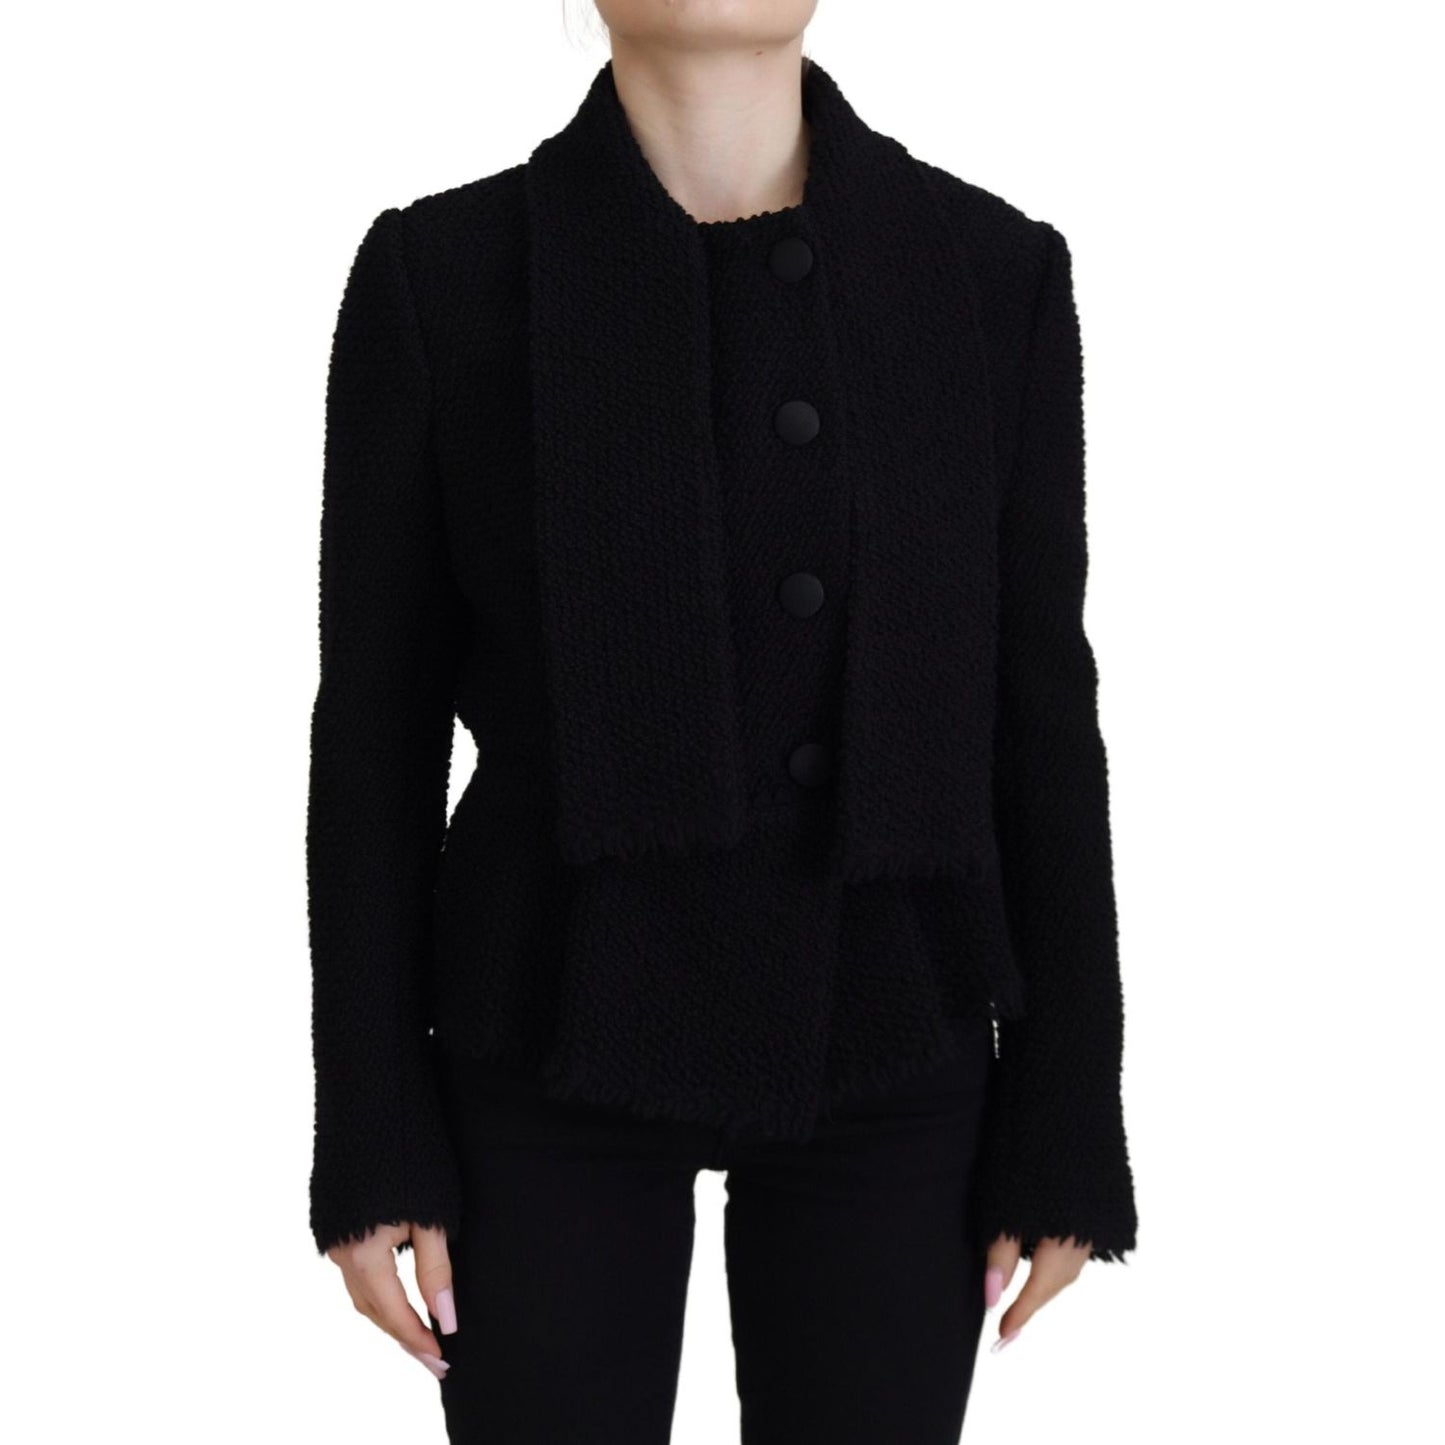 Dolce & Gabbana Elegant Double Breasted Wool-Silk Jacket black-wool-coat-blazer-wrap-jacket